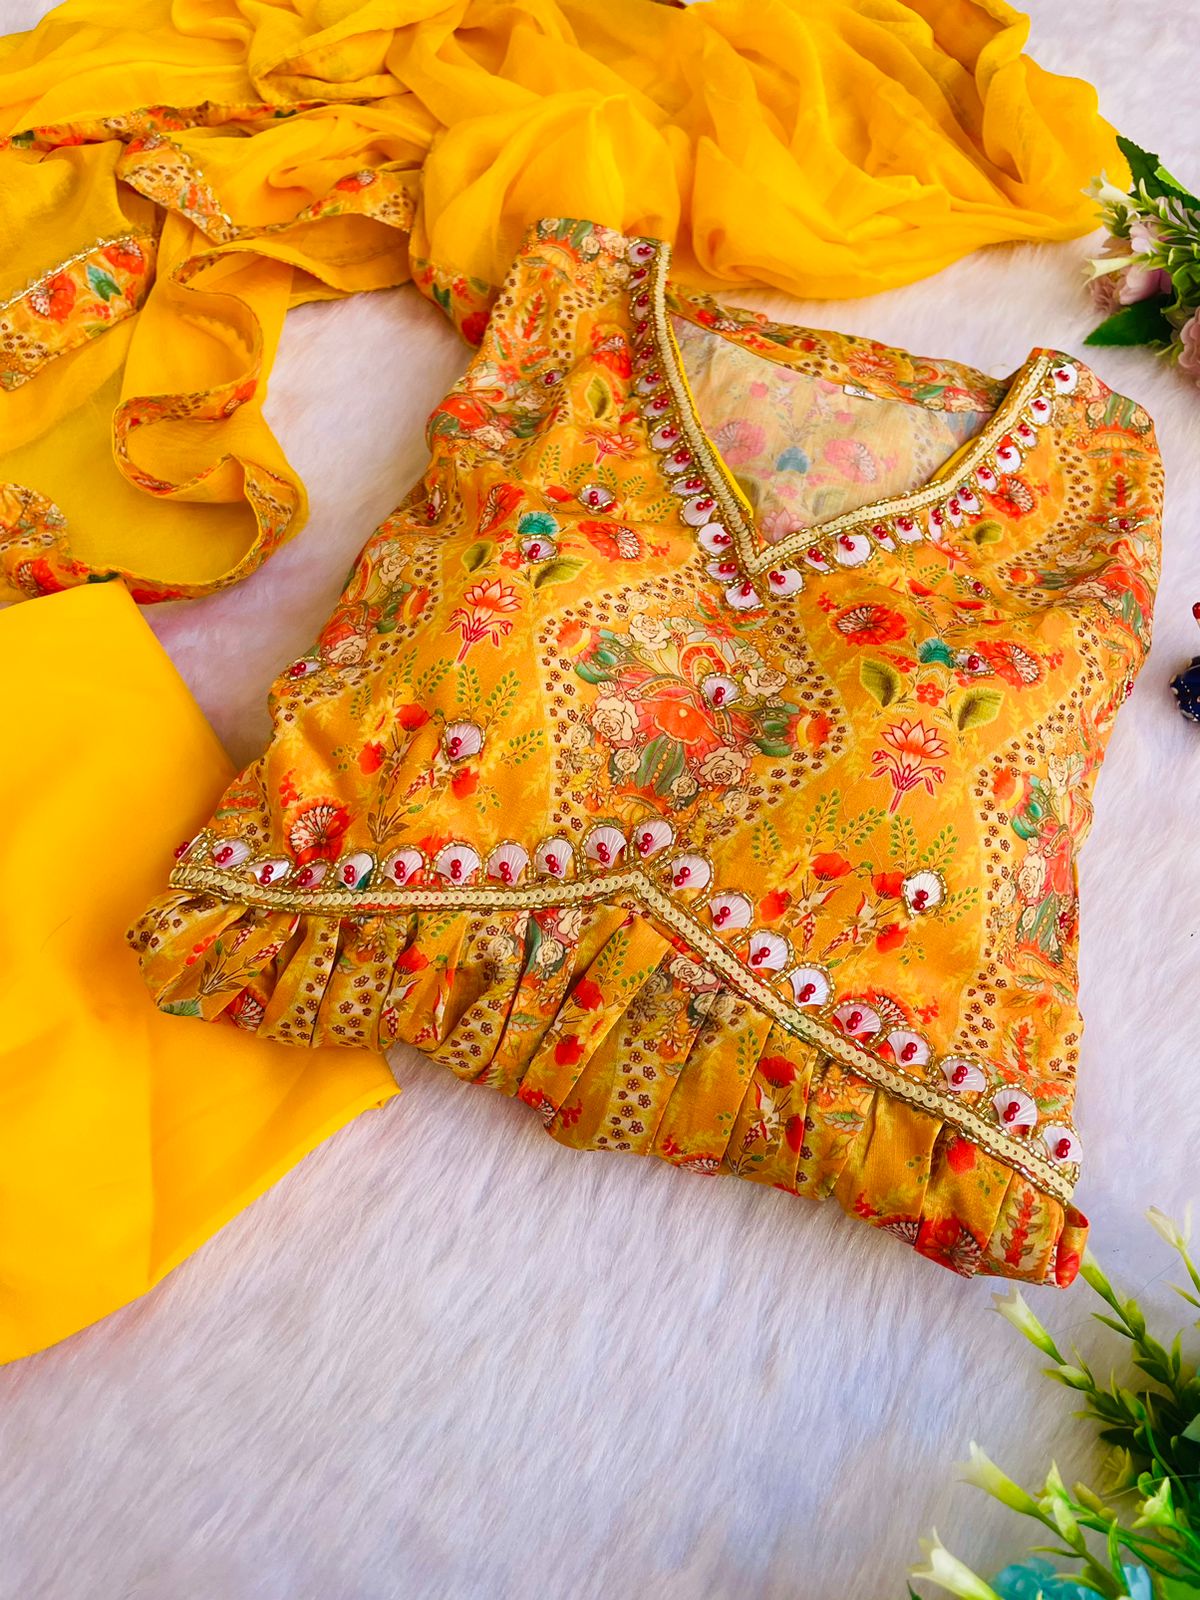 Alia Cut Stunning Soft Muslin Cotton Hand Worked Anarkali Pant Suit